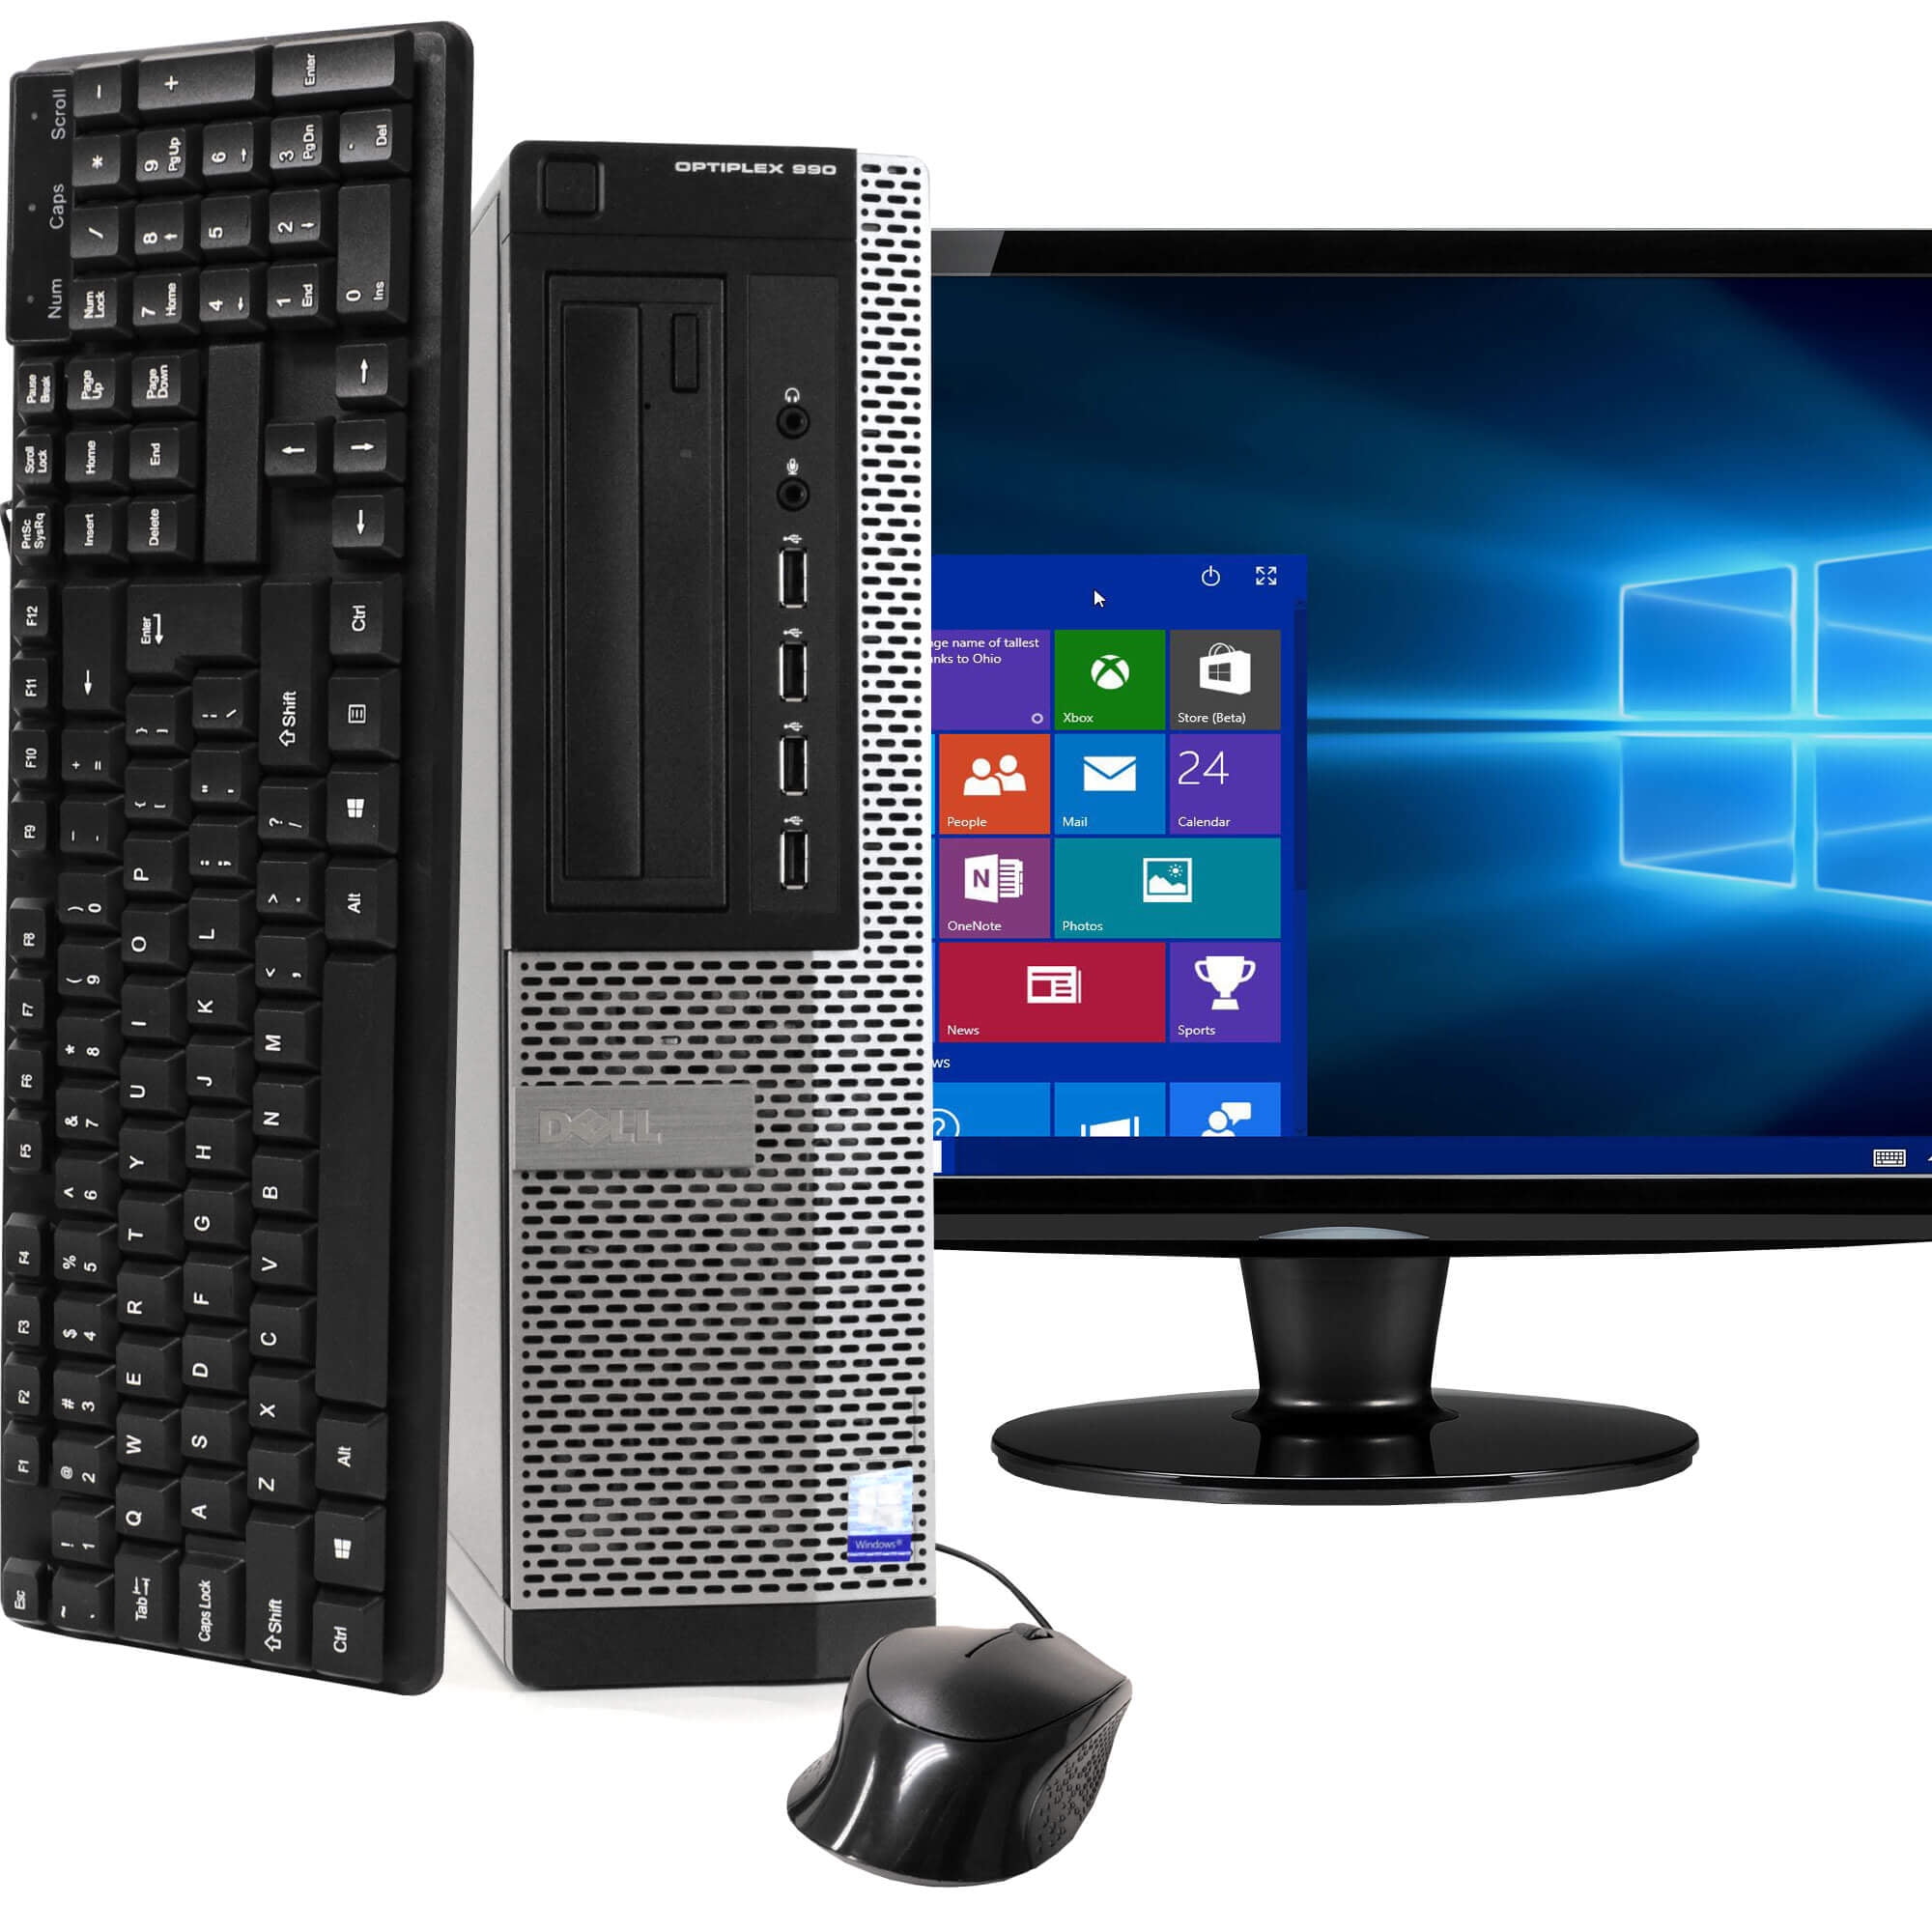 Windows 10 Pro Wi-Fi 16GB DDR3 RAM Gaming Keyboard & Mouse Renewed Custom Built Dell OptiPlex Tower Desktop Computer PC i5 4570 3.20 GHz 512 GB SSD 